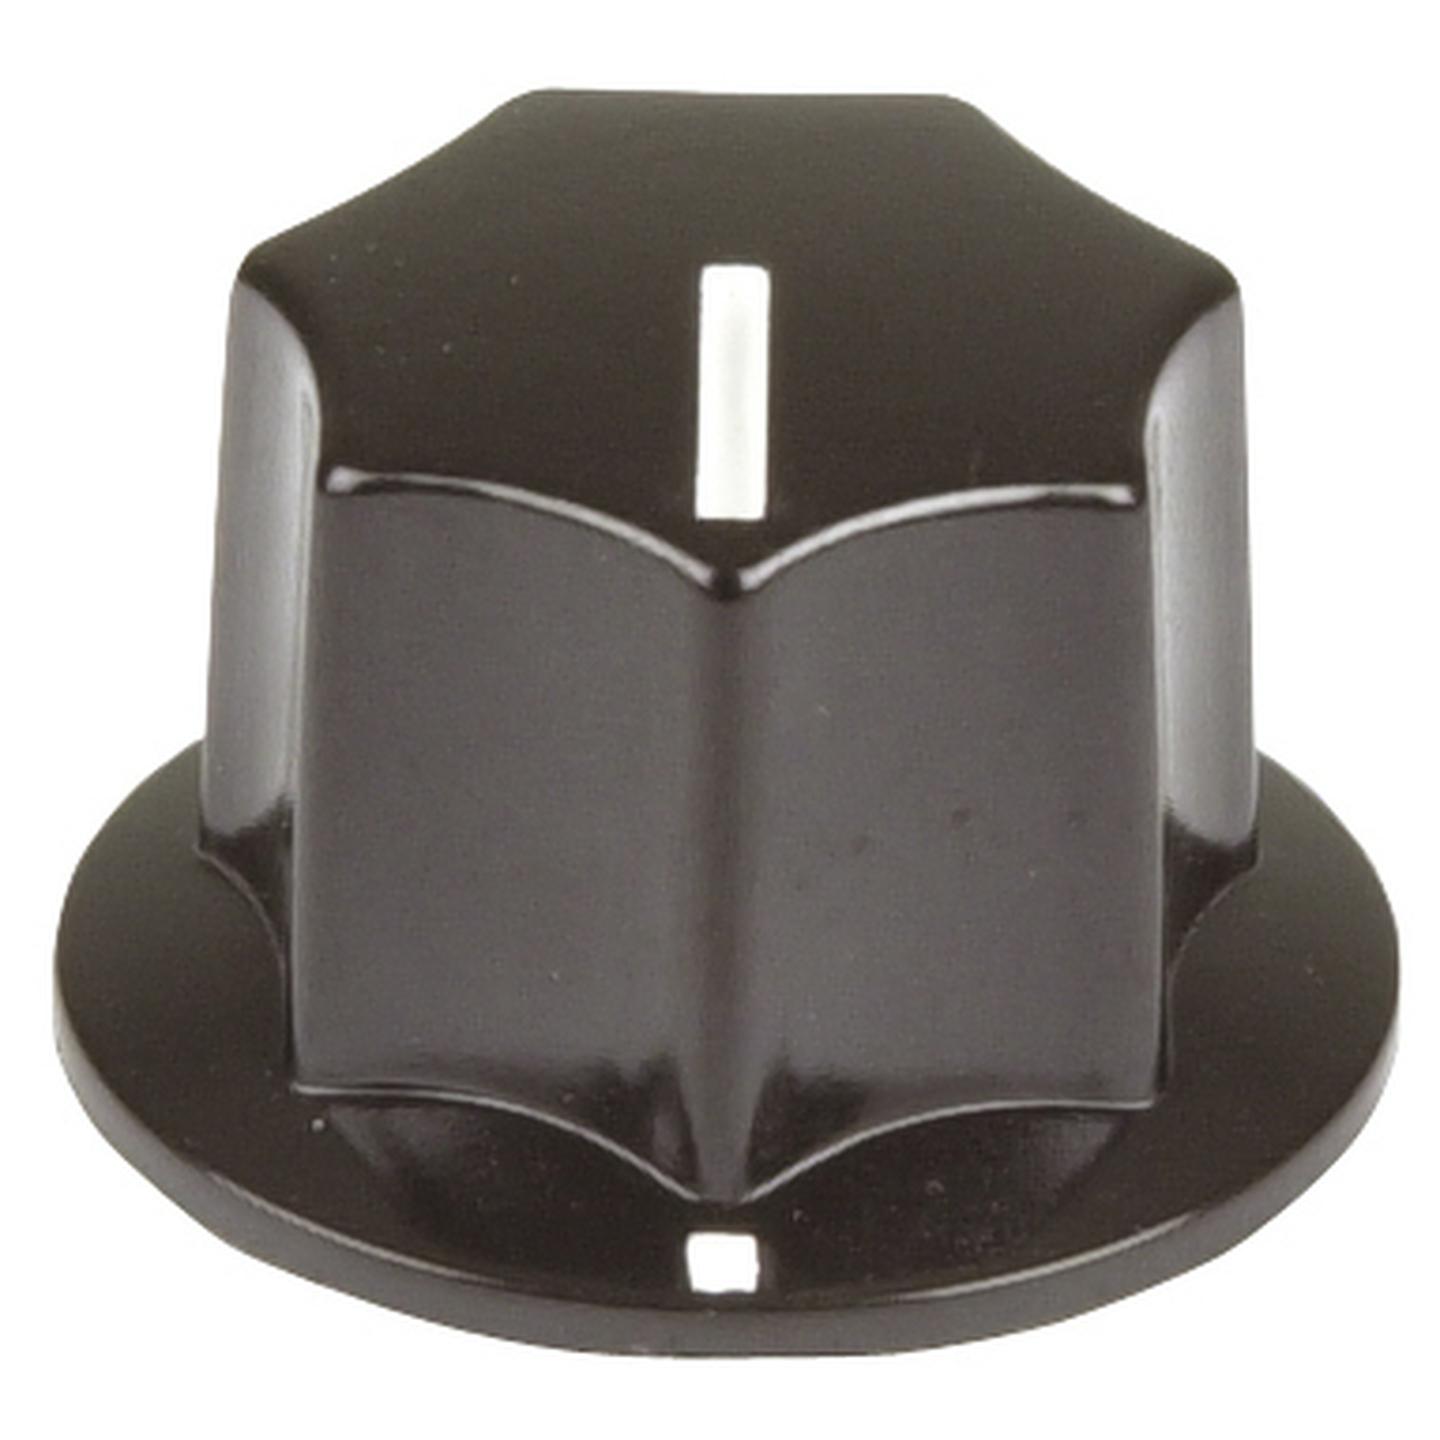 23mm Knob - Black Plastic with Pointer